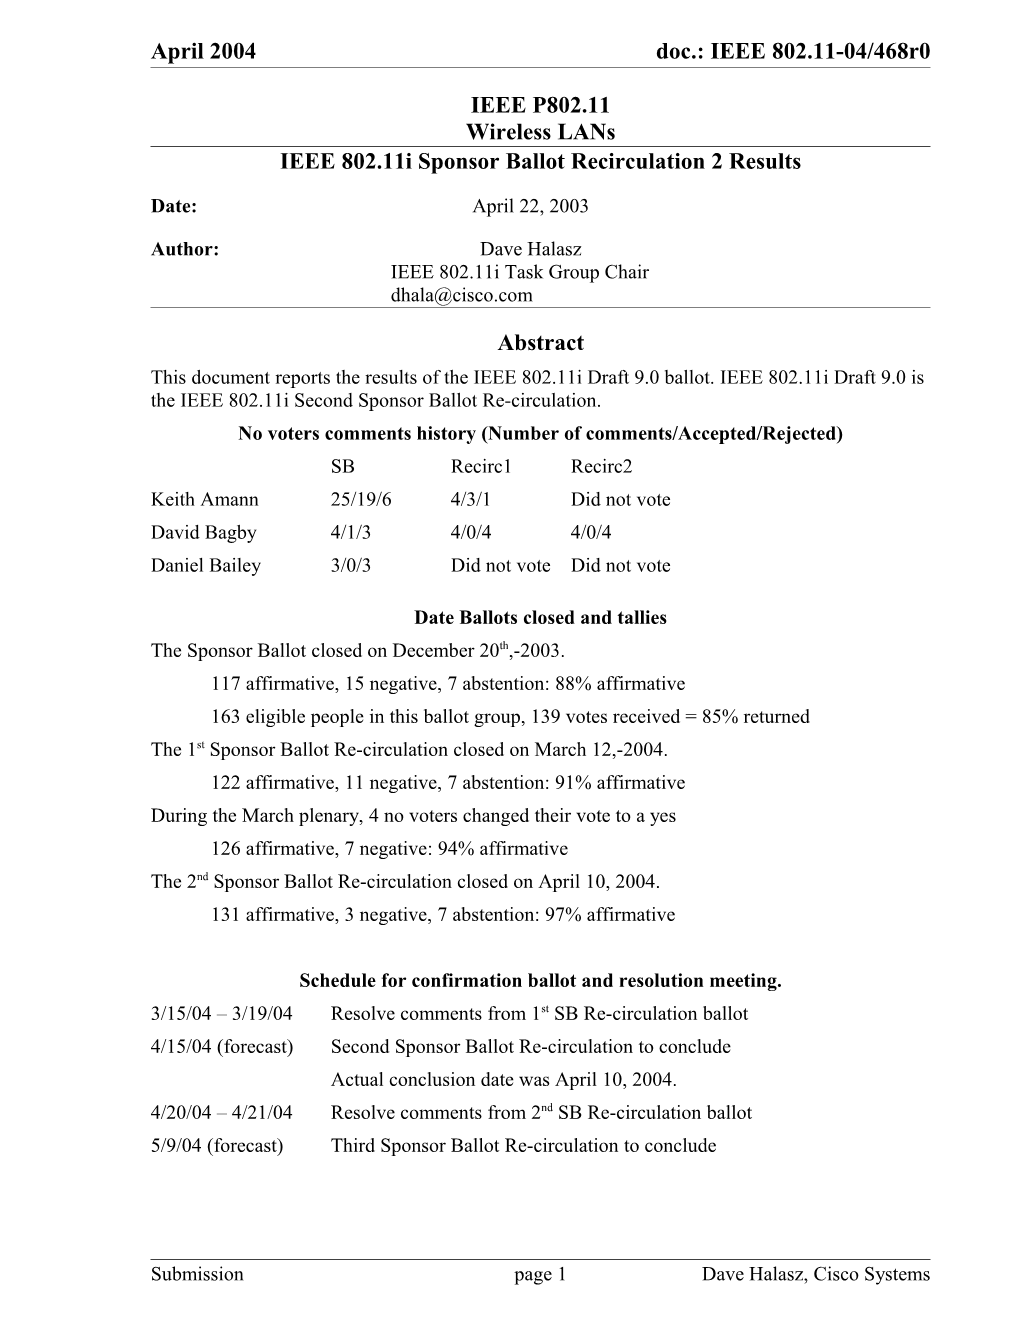 IEEE 802.11I Sponsor Ballot Recirculation 2 Results